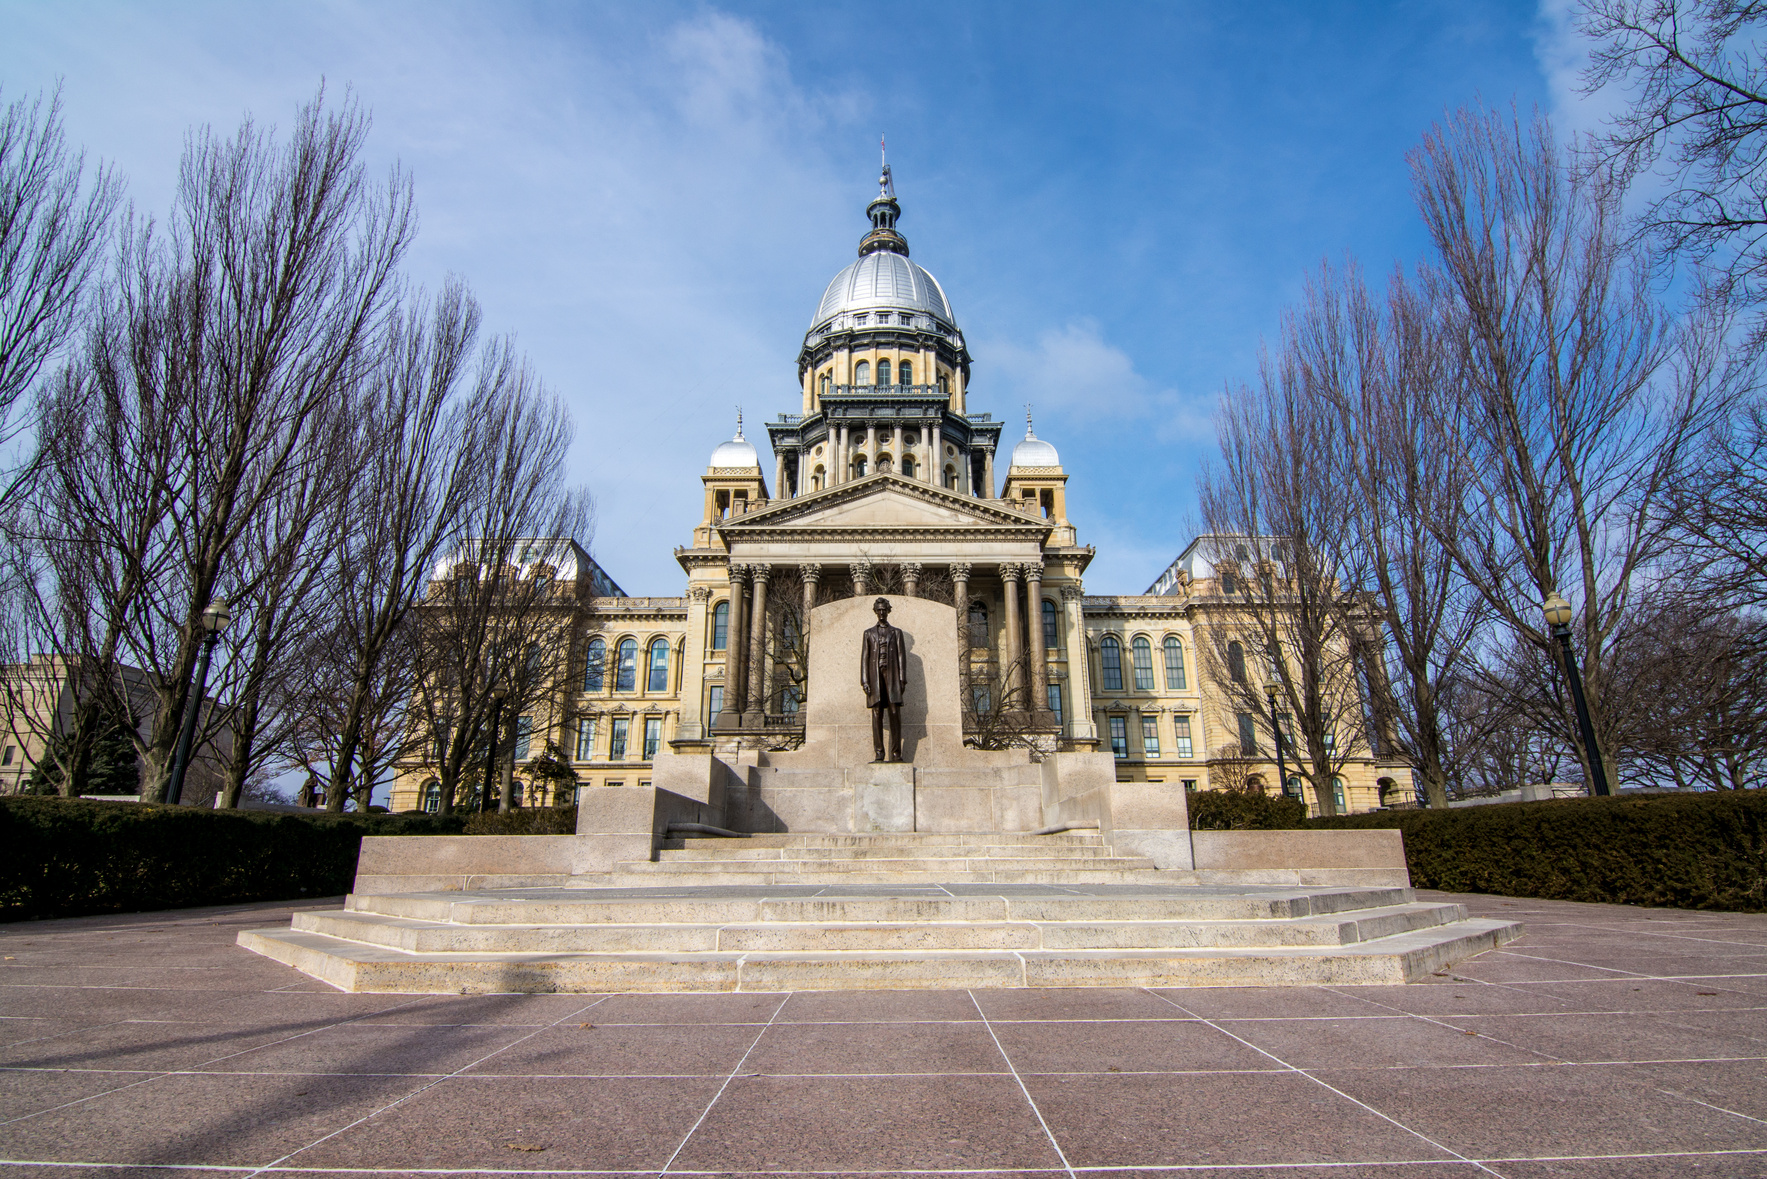 Illinois state capitol building, Springfield, Illinois.